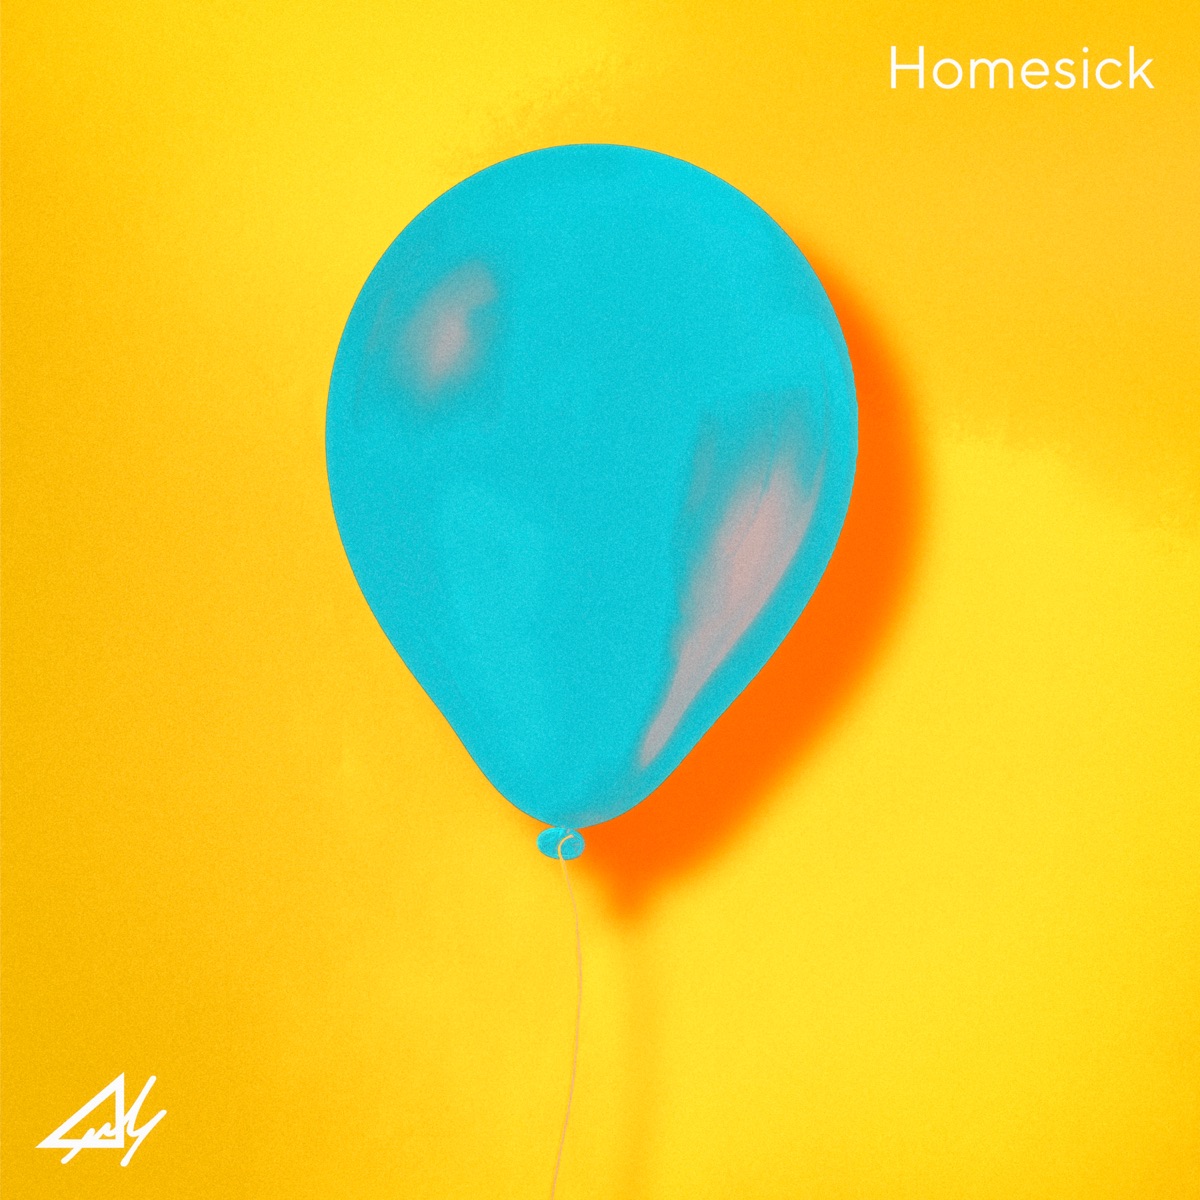 『Anly - Homesick』収録の『Homesick』ジャケット